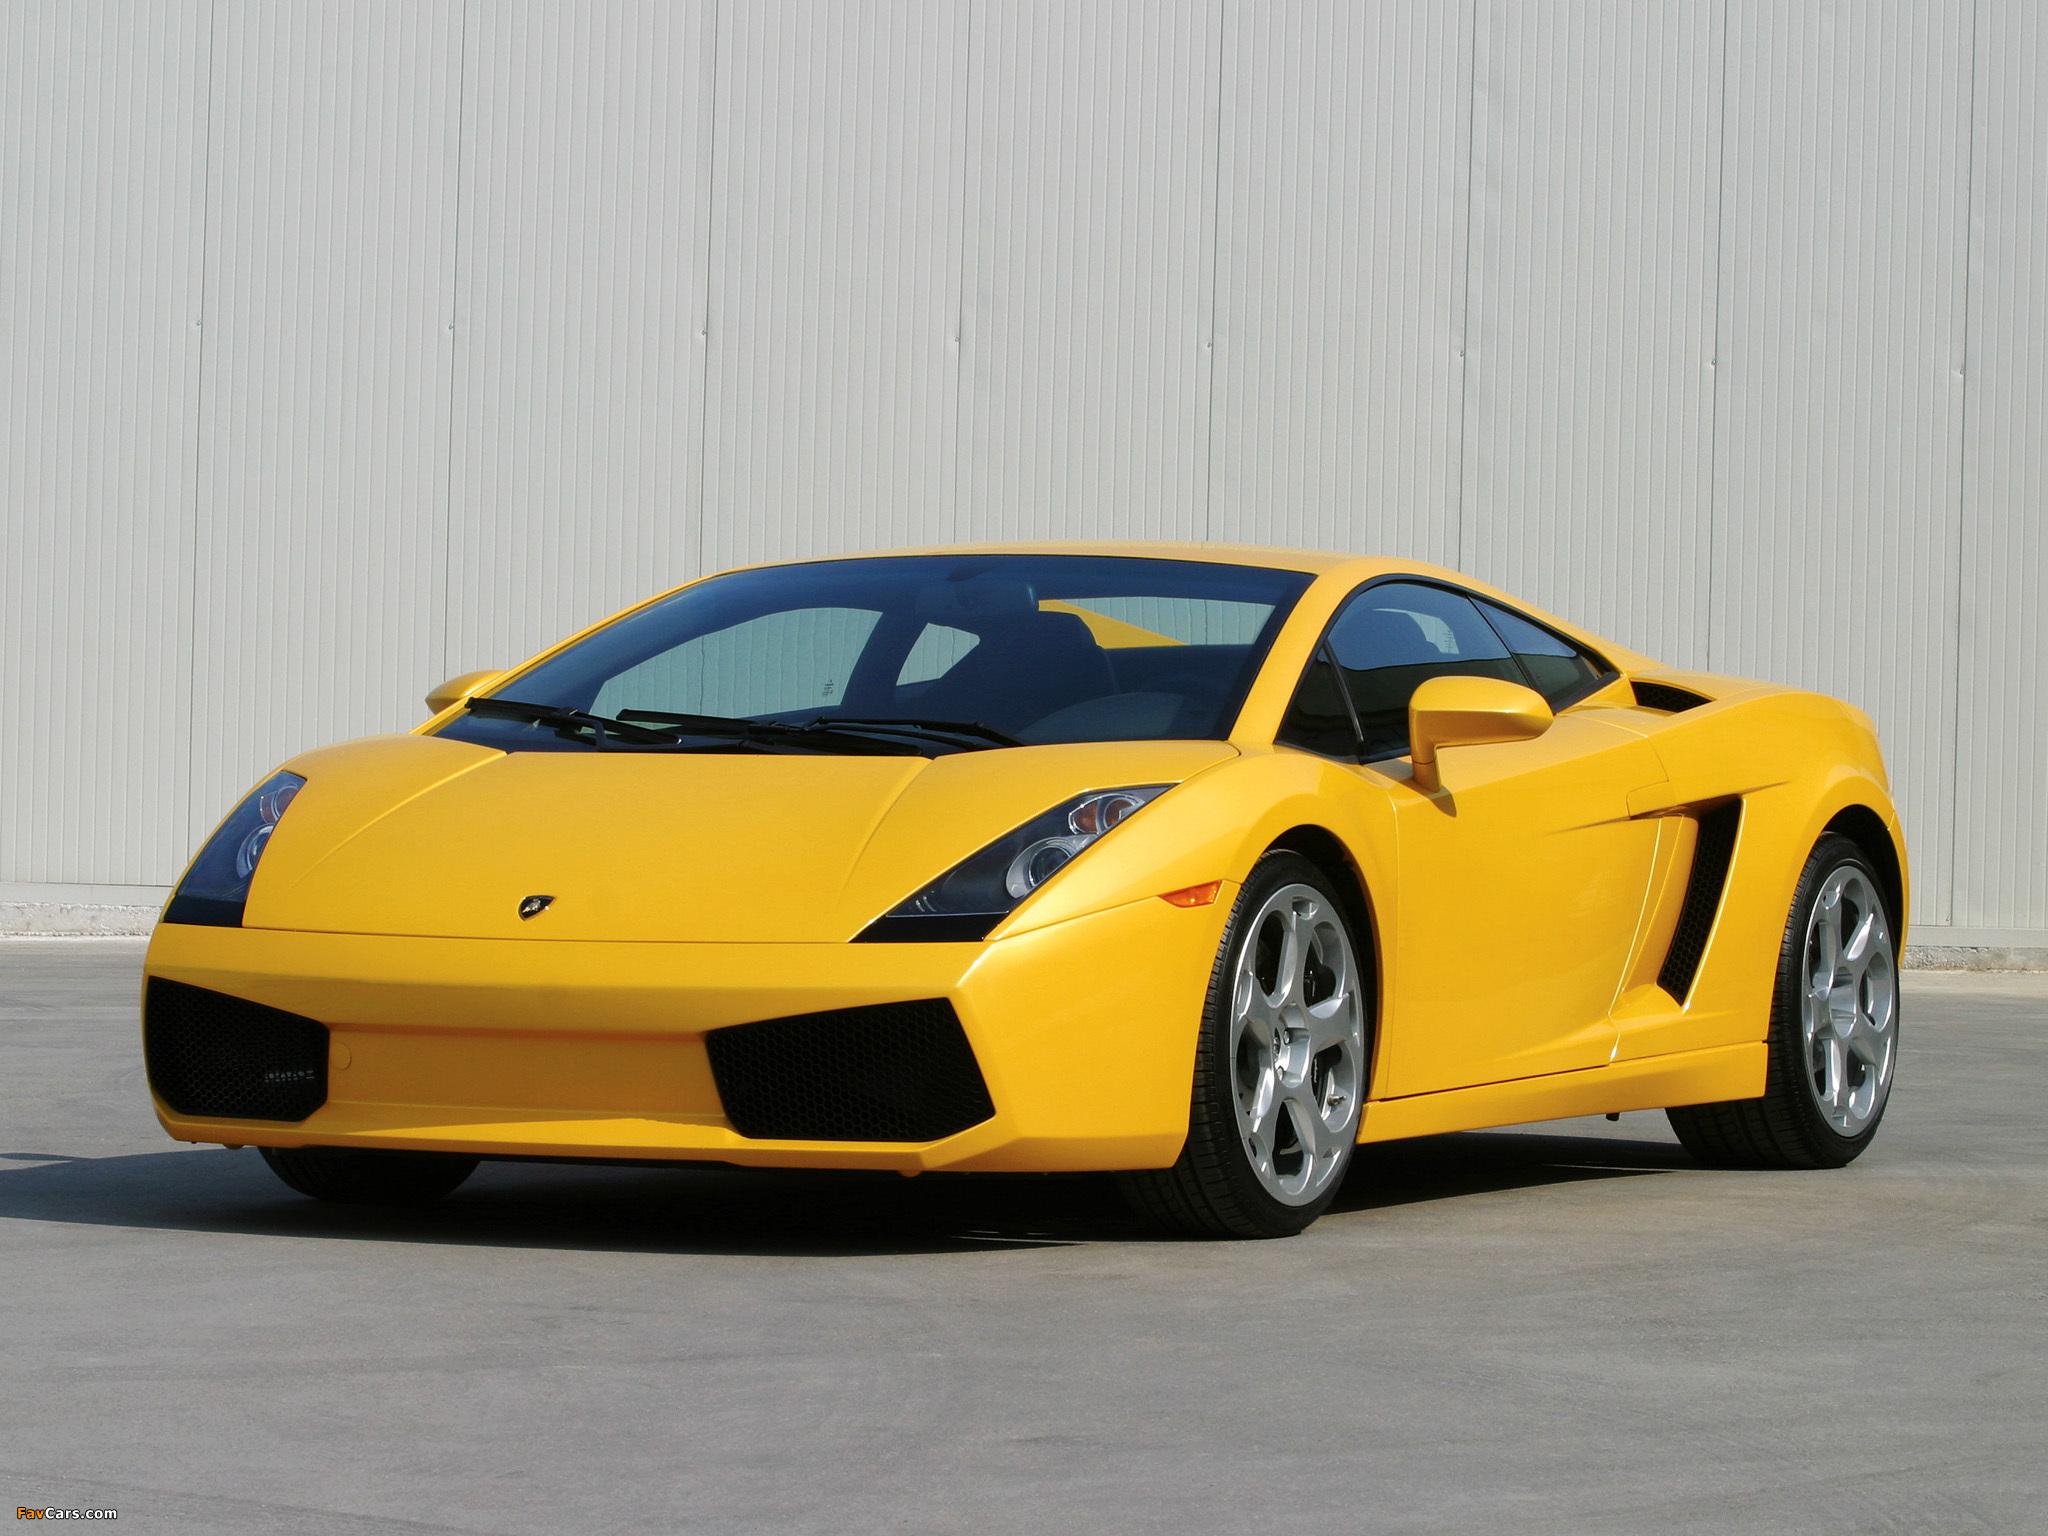 Lamborghini Gallardo 0-60, quarter mile, acceleration times -  AccelerationTimes.com